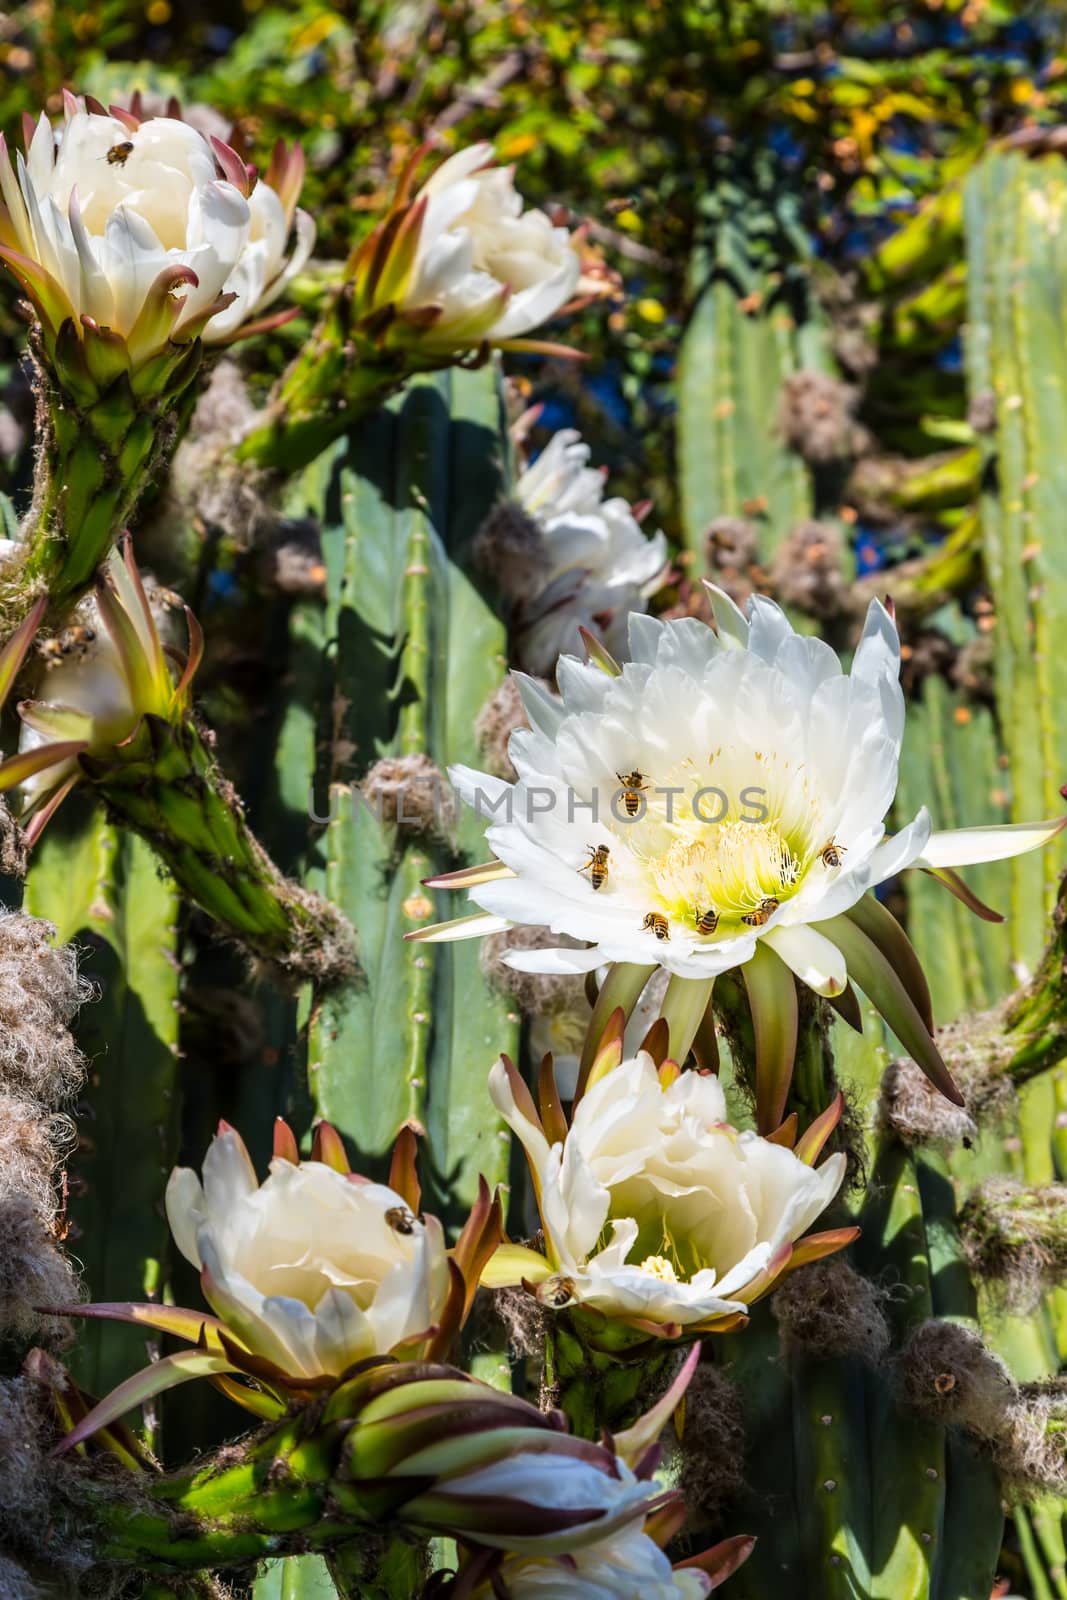 Bees on Cereus Cactus Bloom by Creatista